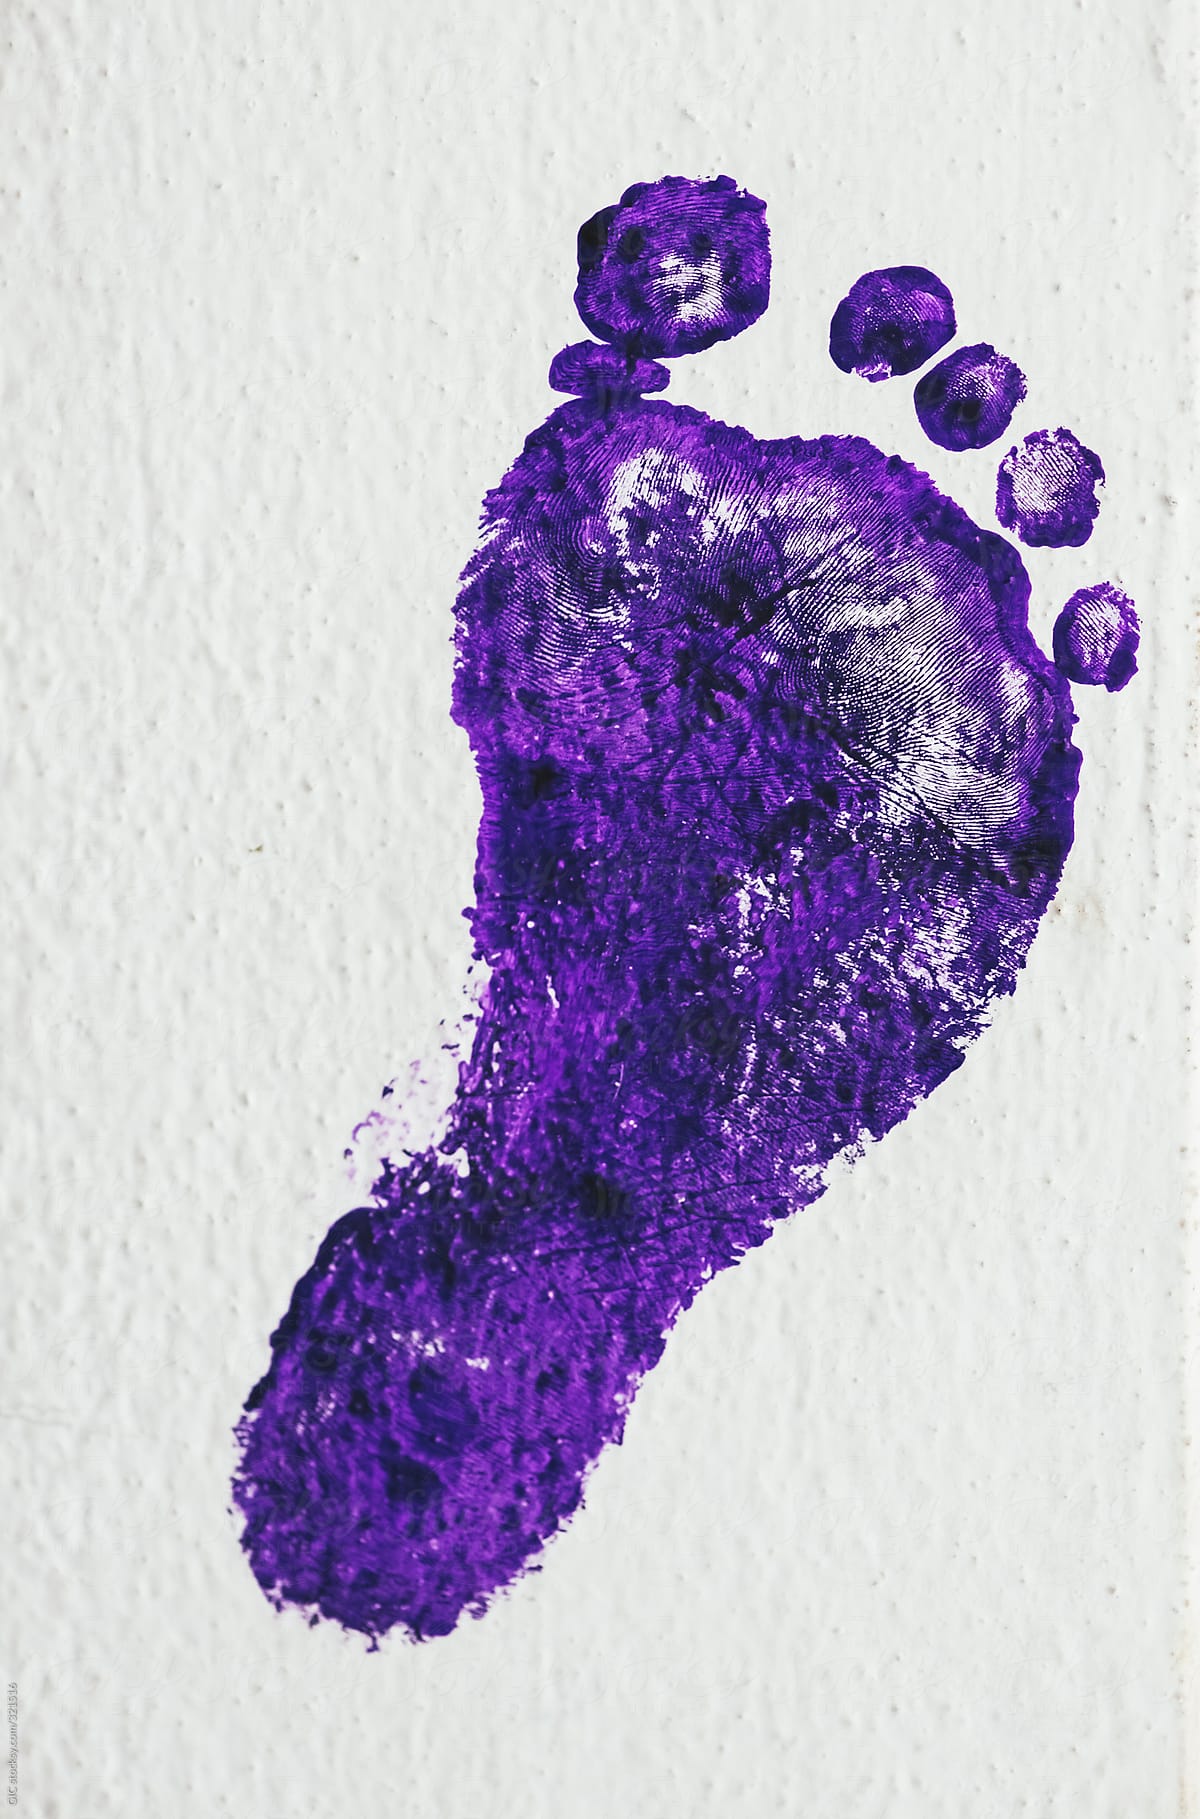 purple footprint